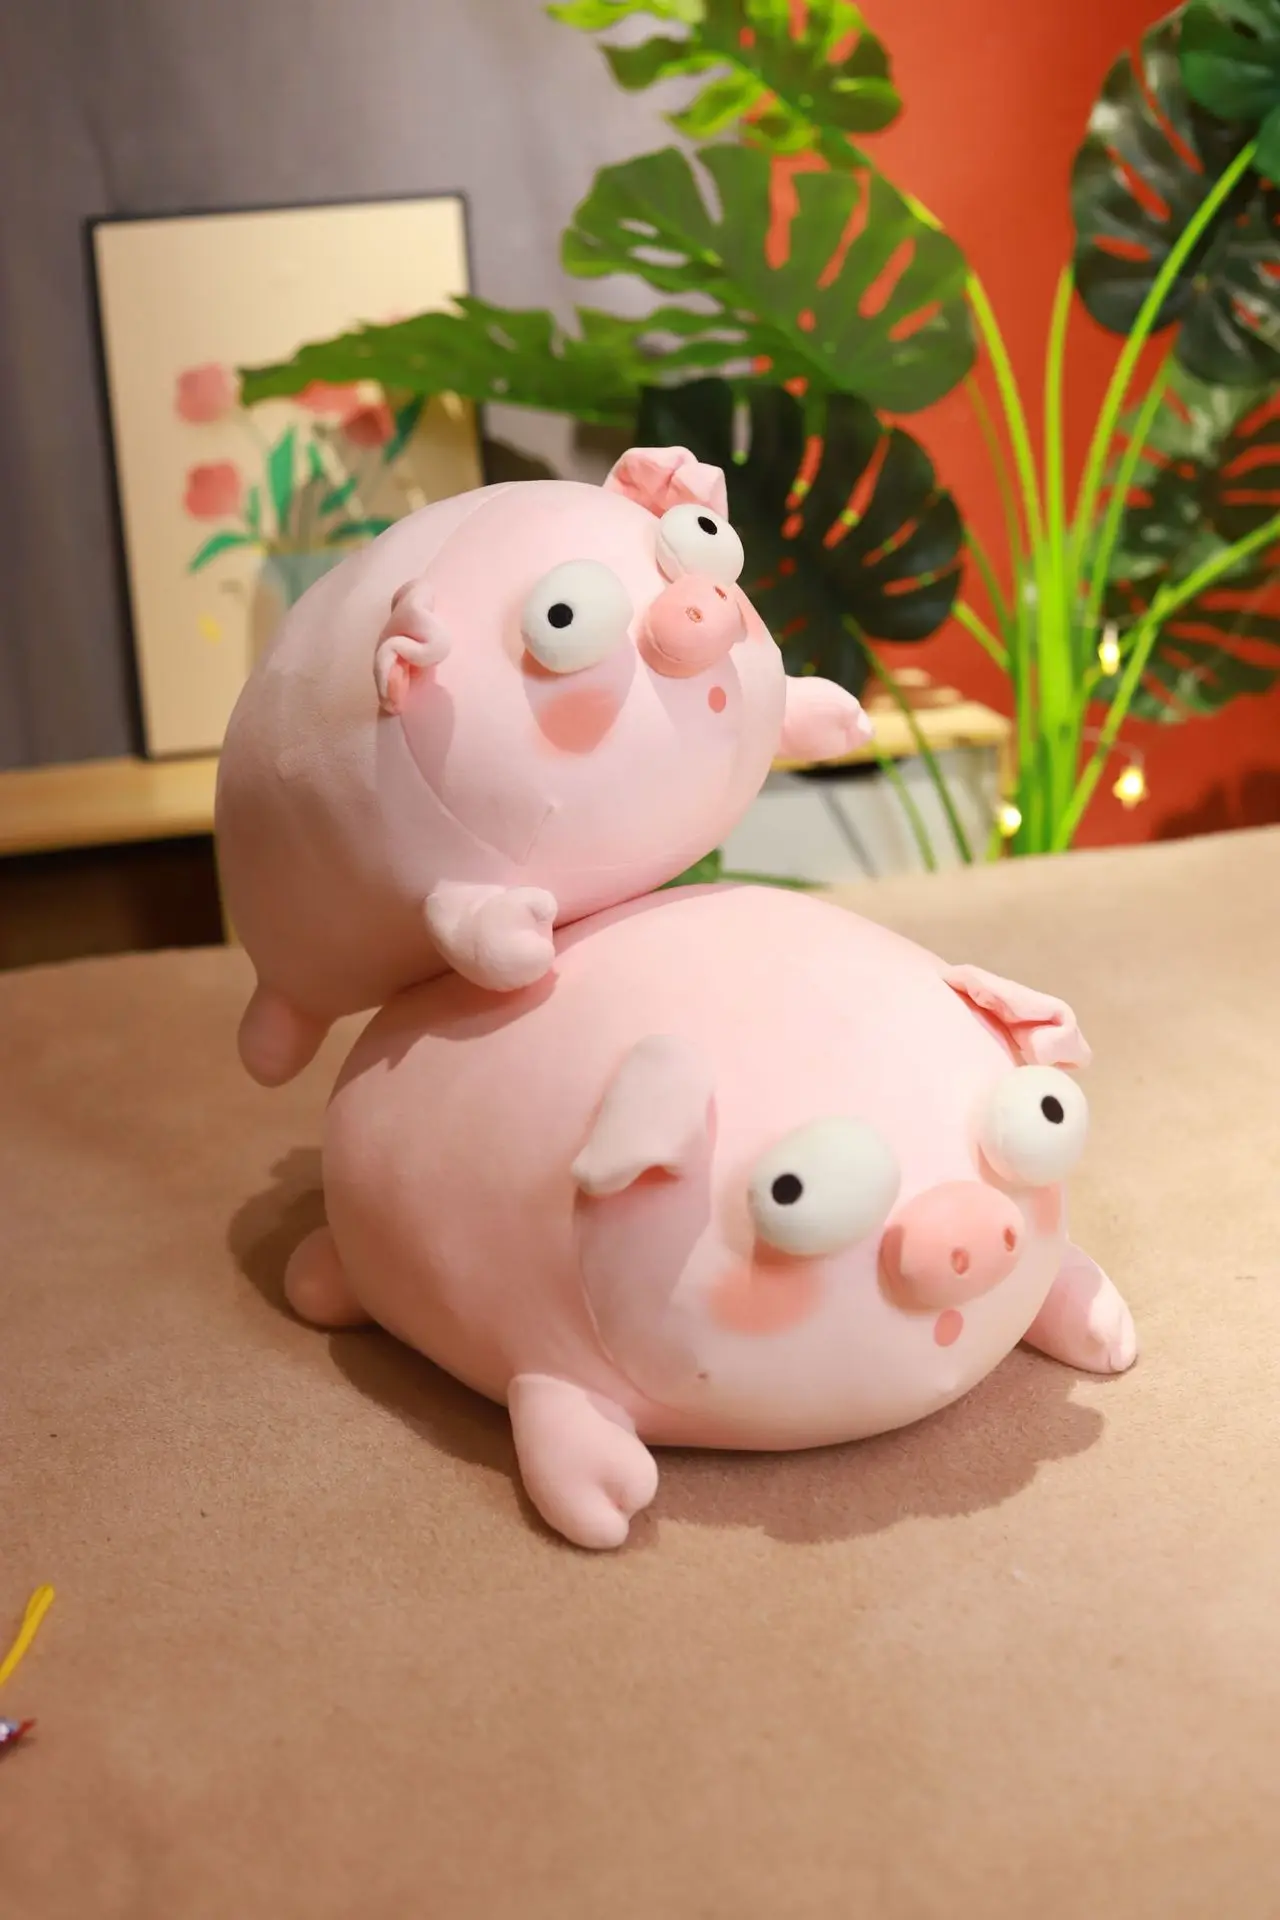 Sea Pig Plush | Big Eyes Ugly Sleeping Pig Plush Toy -1